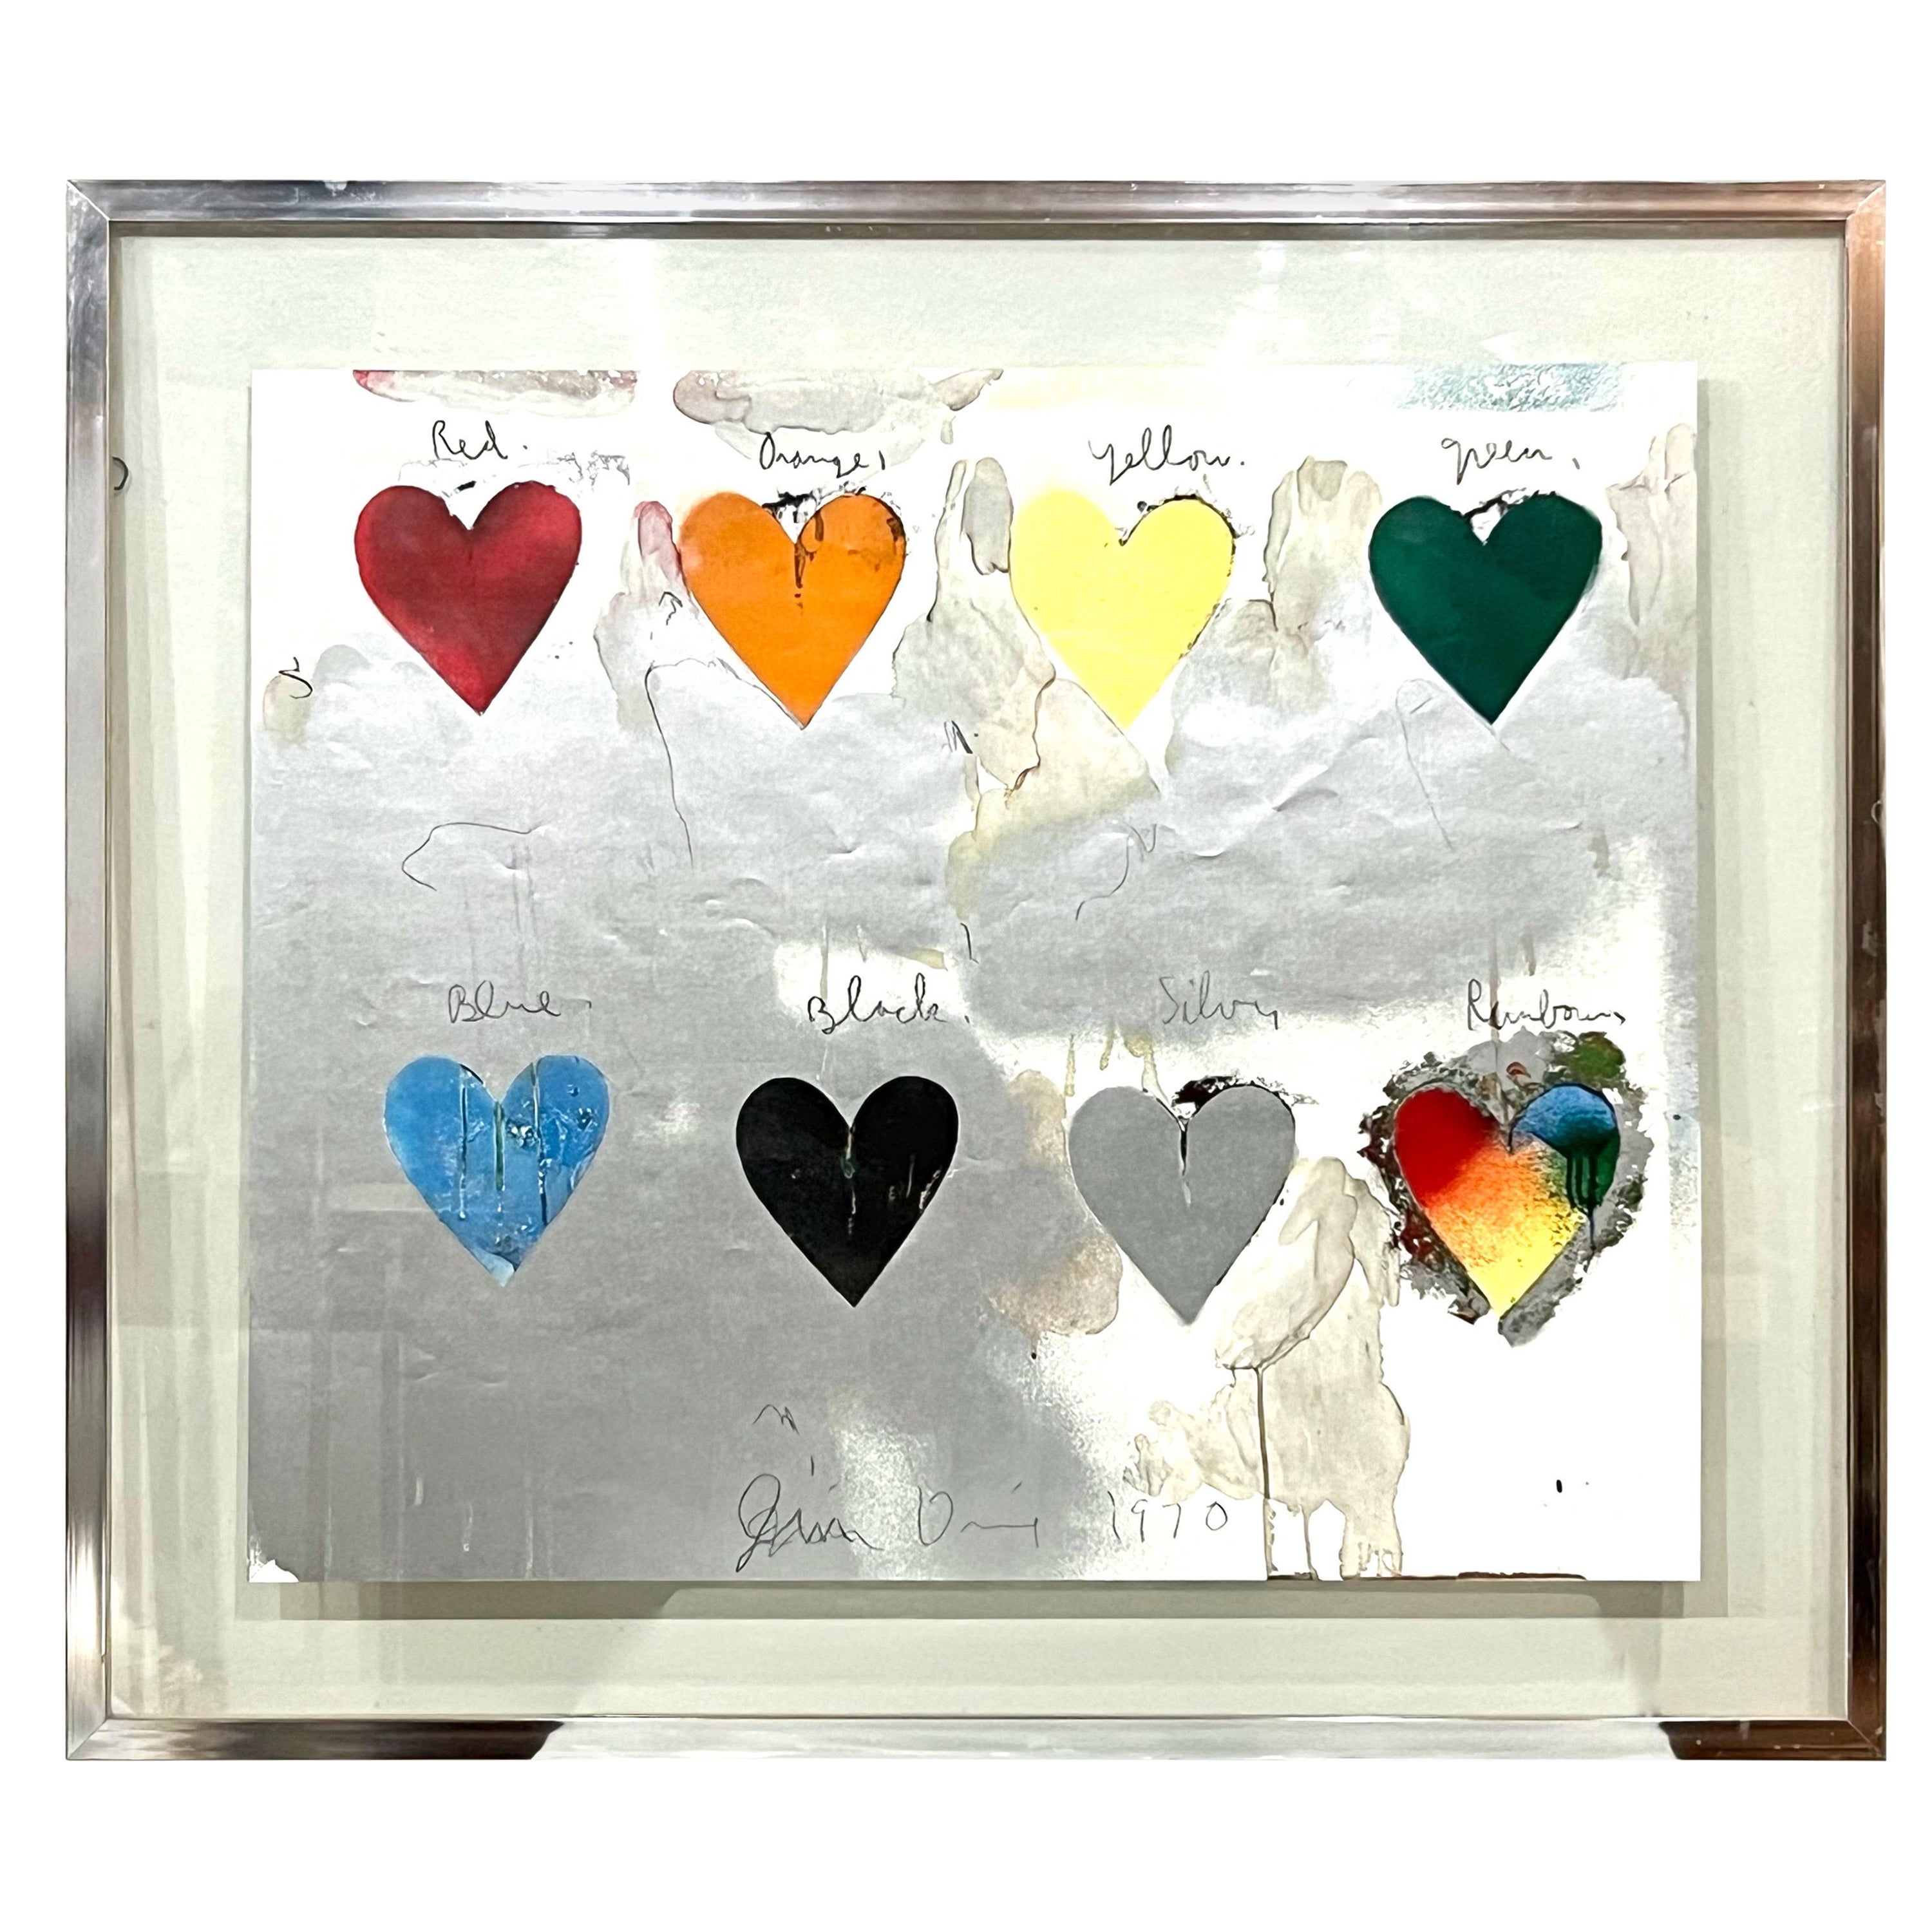 Jim Dine 8 Hearts Bleistift Signierte Original Lithographie